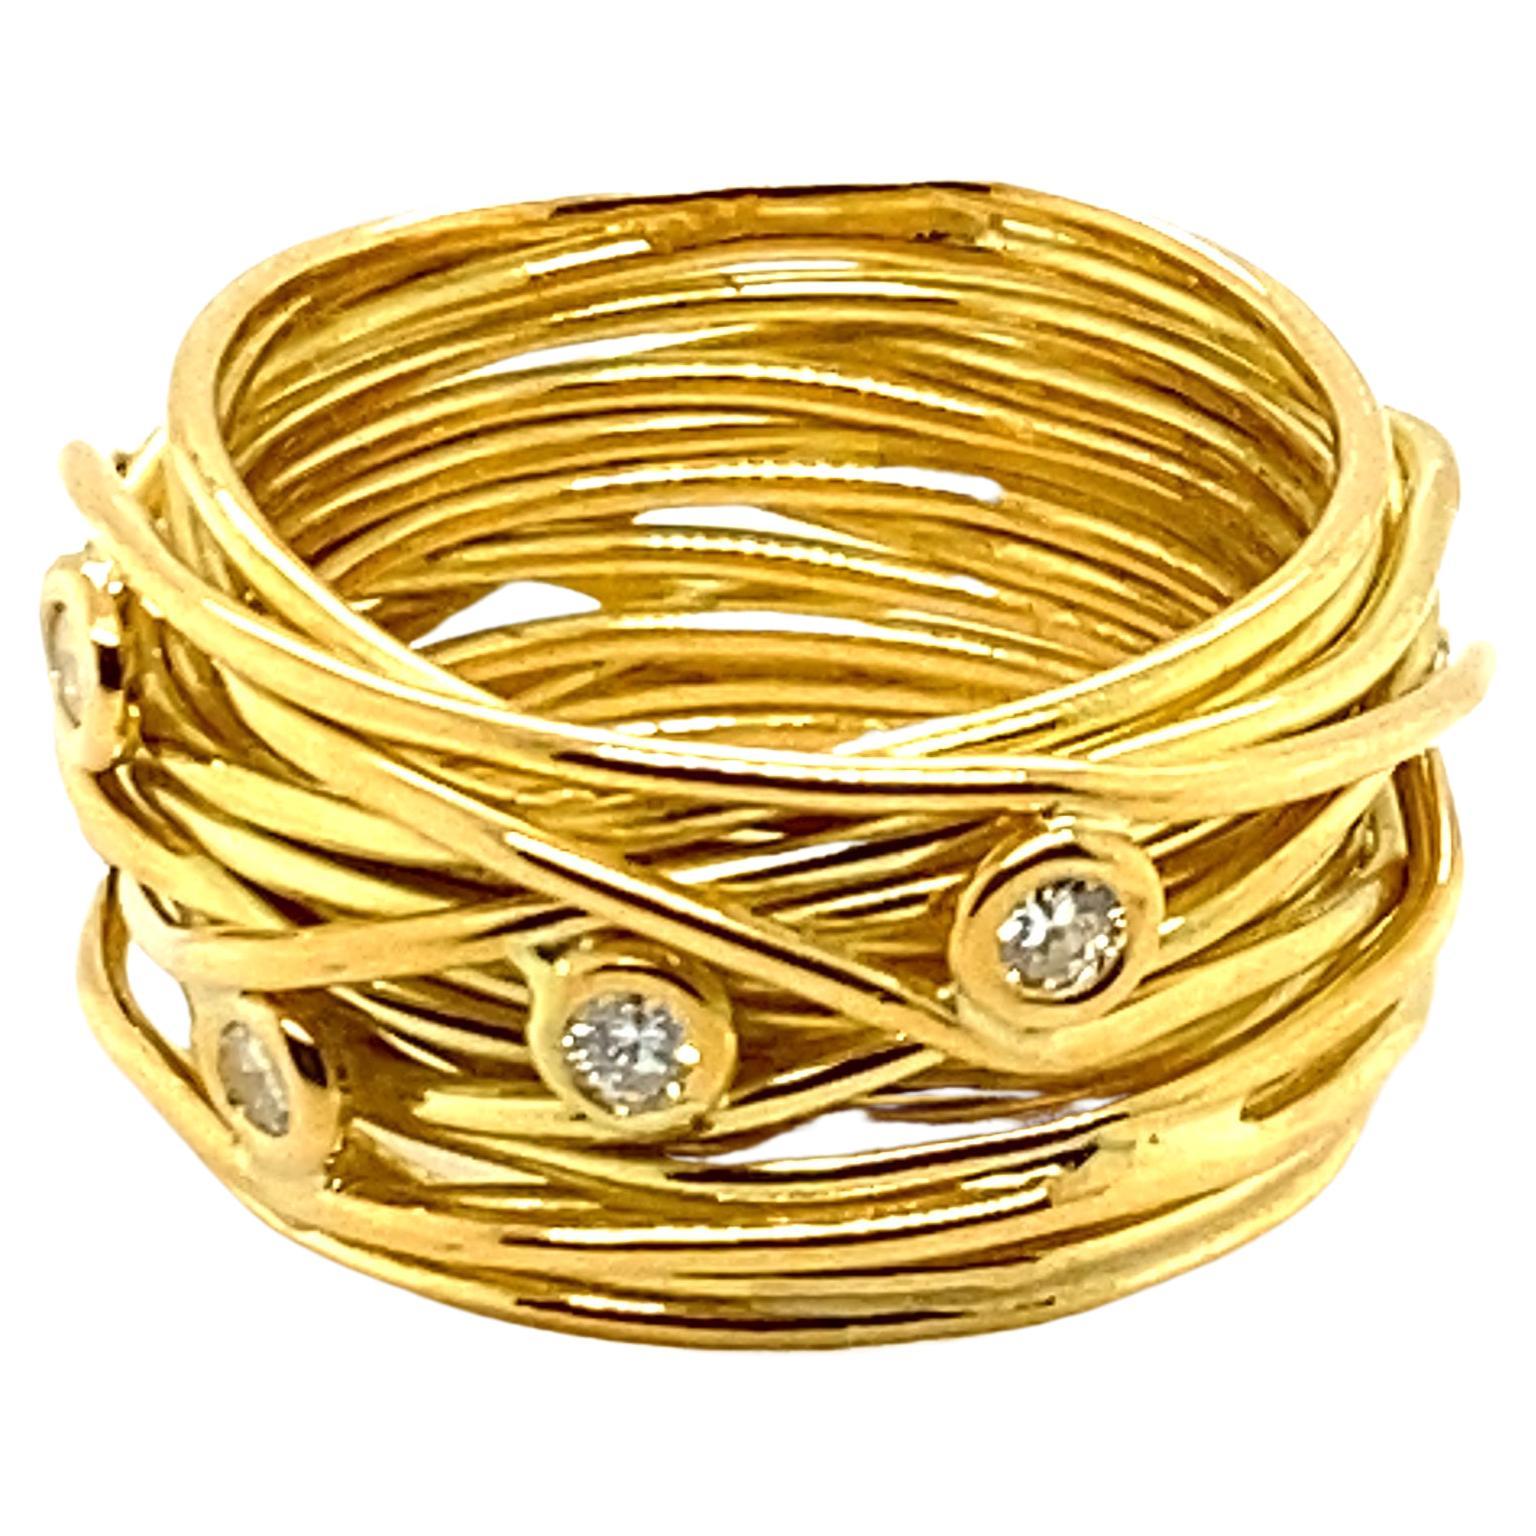 Iconic Diamond Bird's Nest Ring by Devon in 18 Karat Yellow Gold For Sale